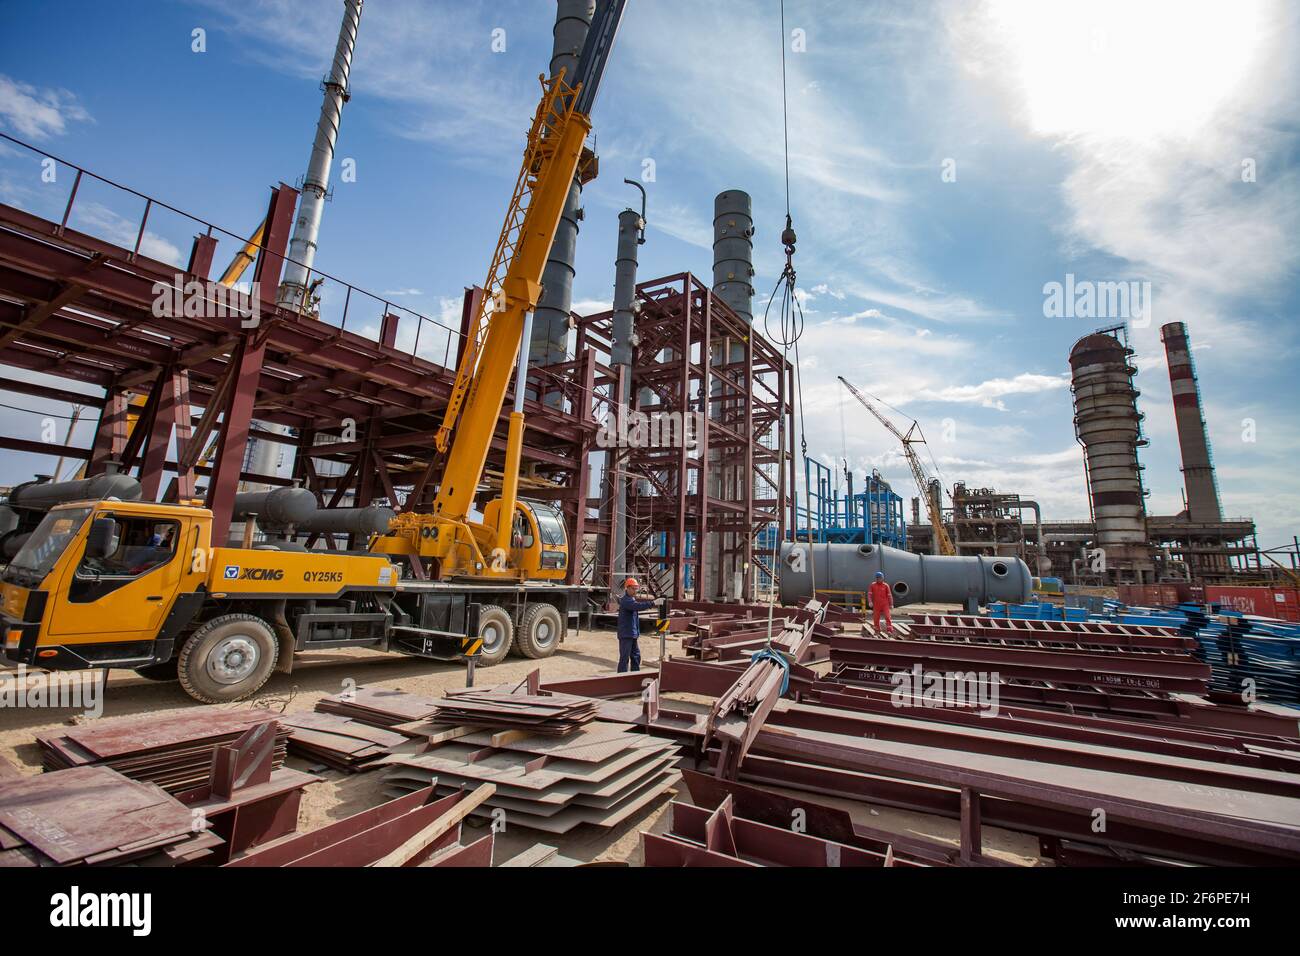 Aktau, Kazakhstan - May 19, 2012: Construction of asphaltic bitumen plant refinery column. Metal distillation tower and yellow hydraulic hoist. Stock Photo